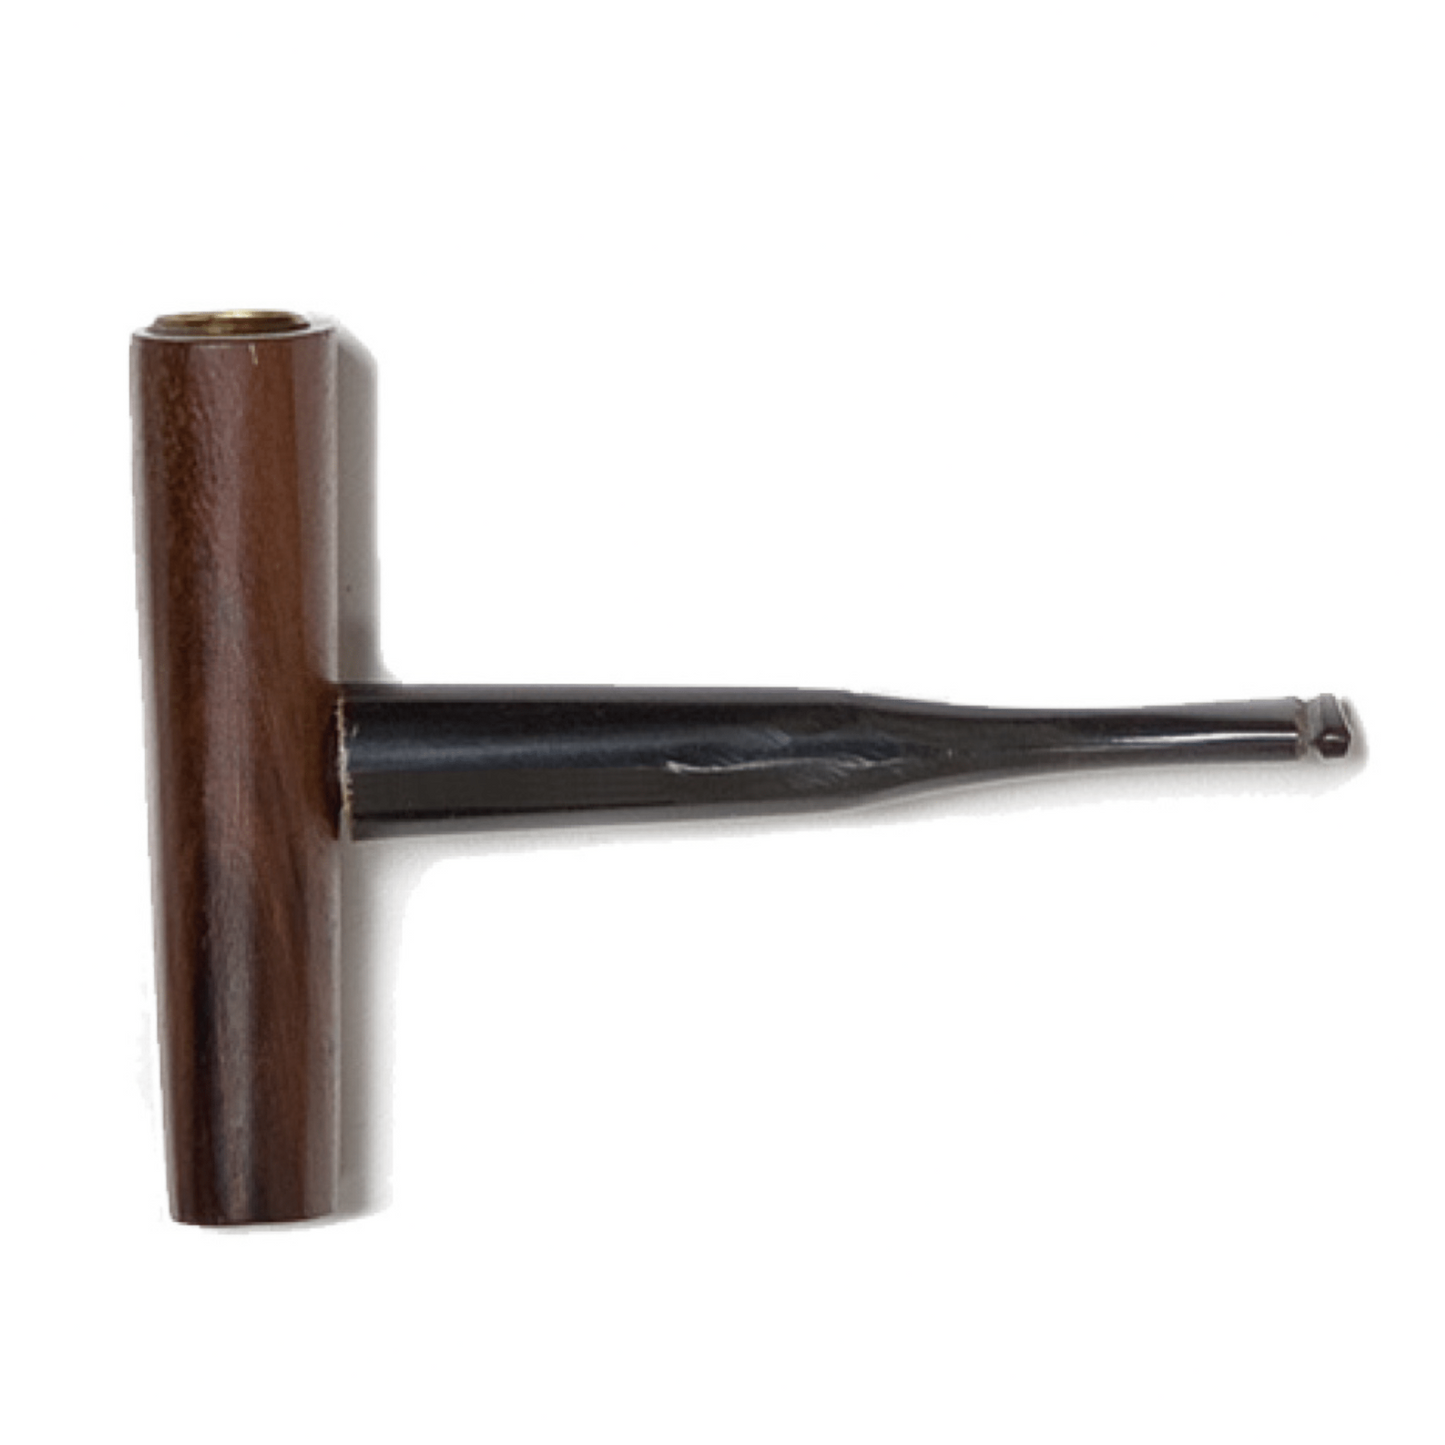 Hammer syle wood pipe *BOGO*